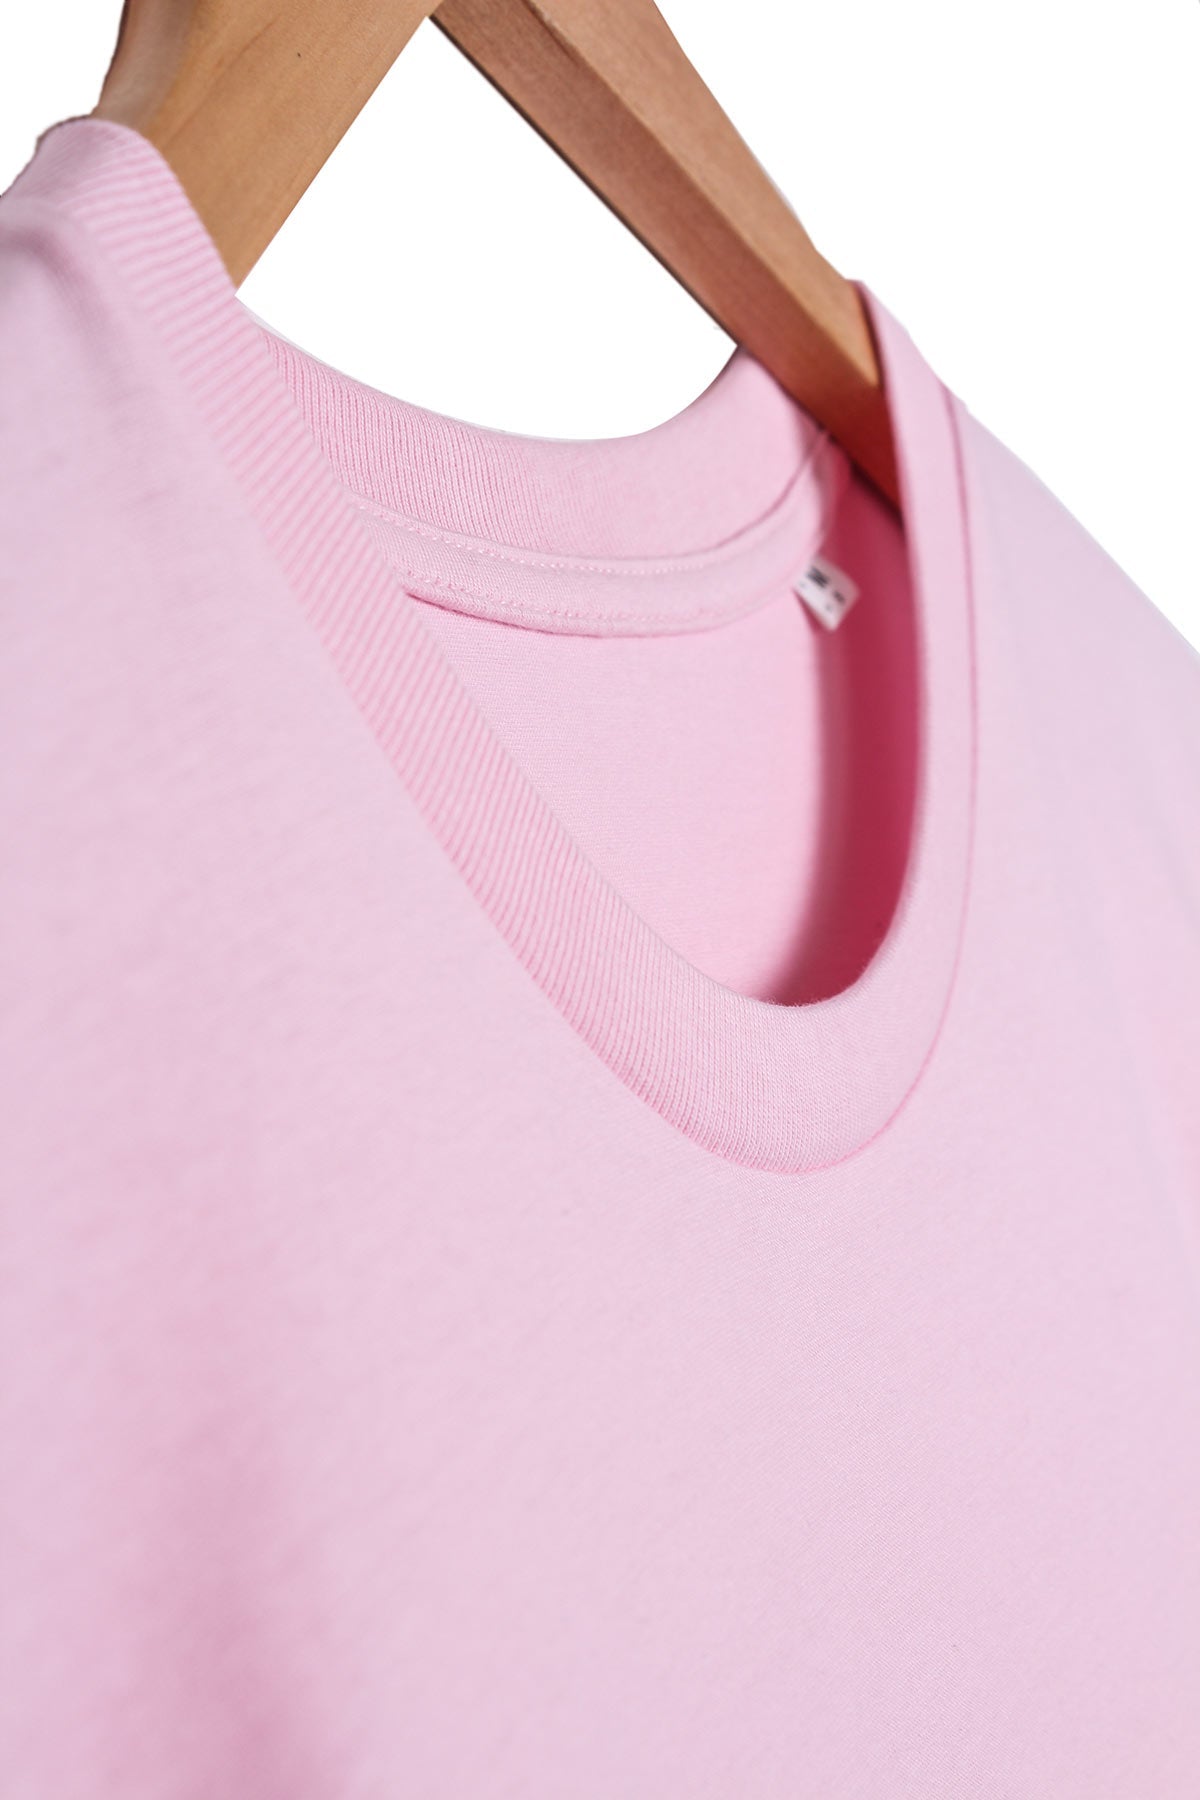 Seconds & Samples - Men's Pink Organic Cotton T-Shirt